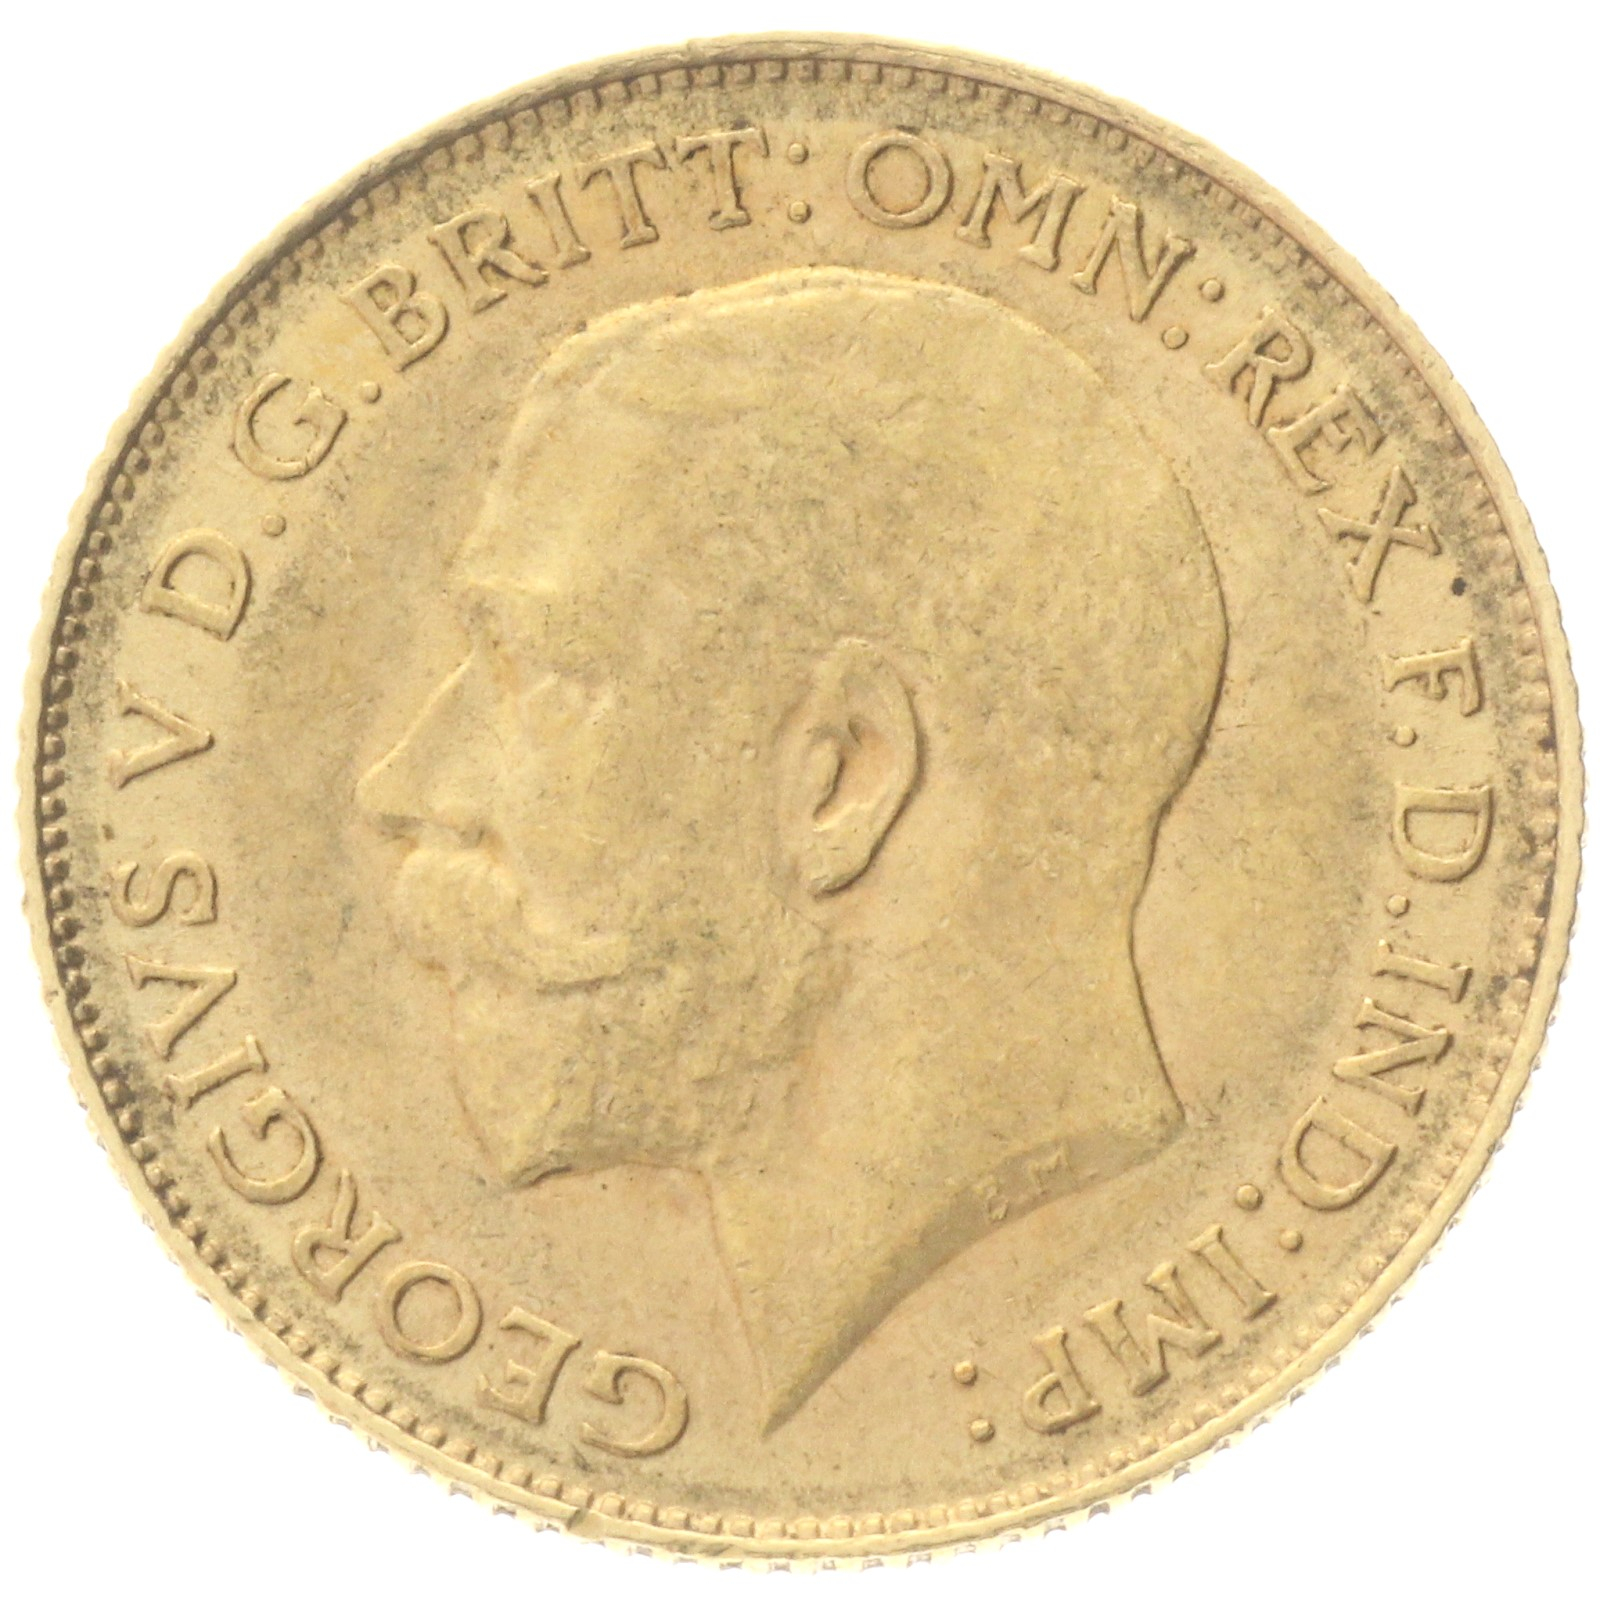 South Africa - ½ Sovereign - 1925 - SA - George V